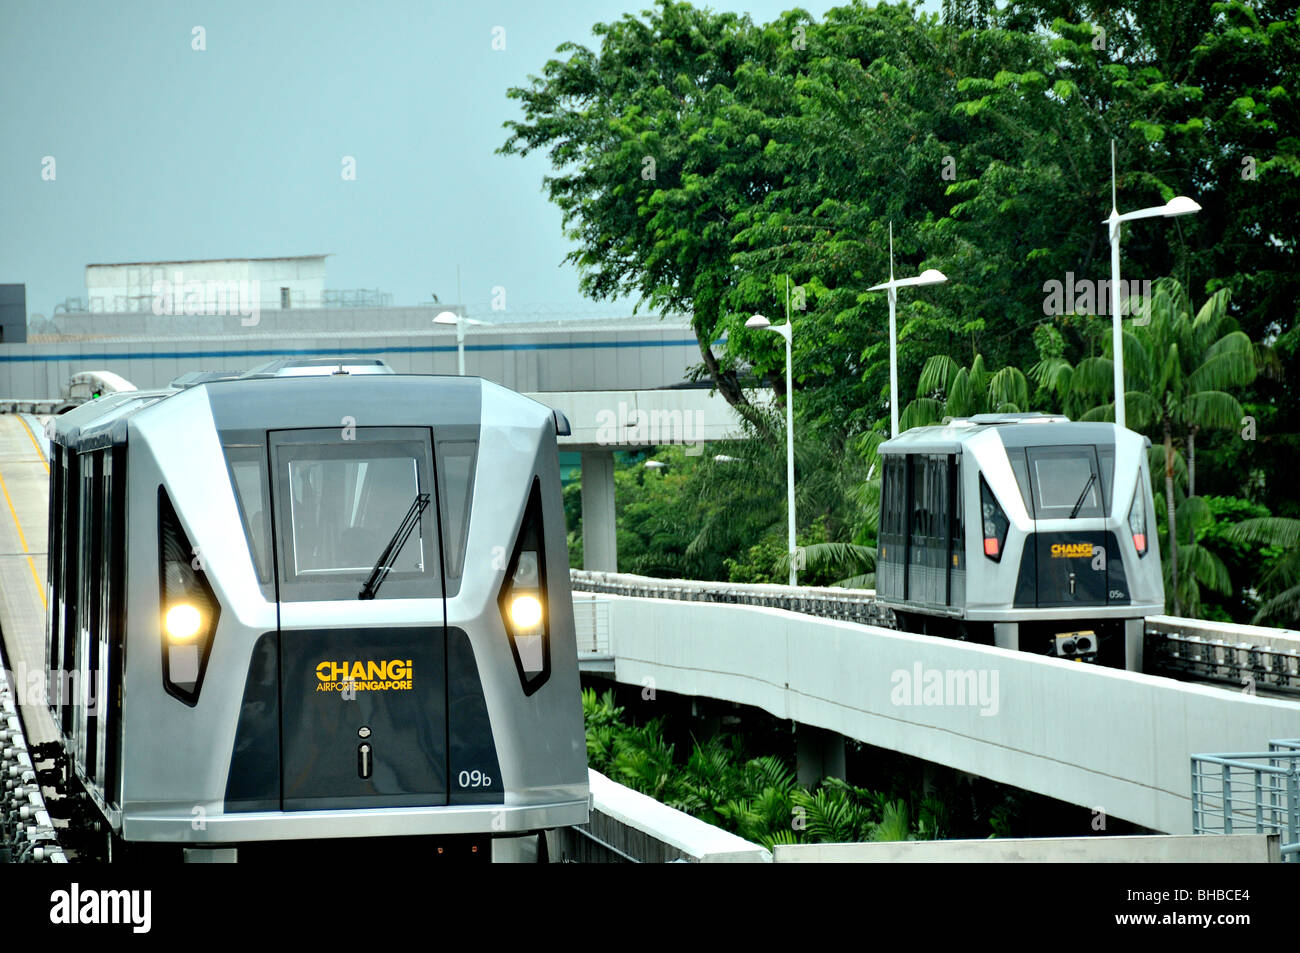 monorail train, Changi airport, Singapore Stock Photo